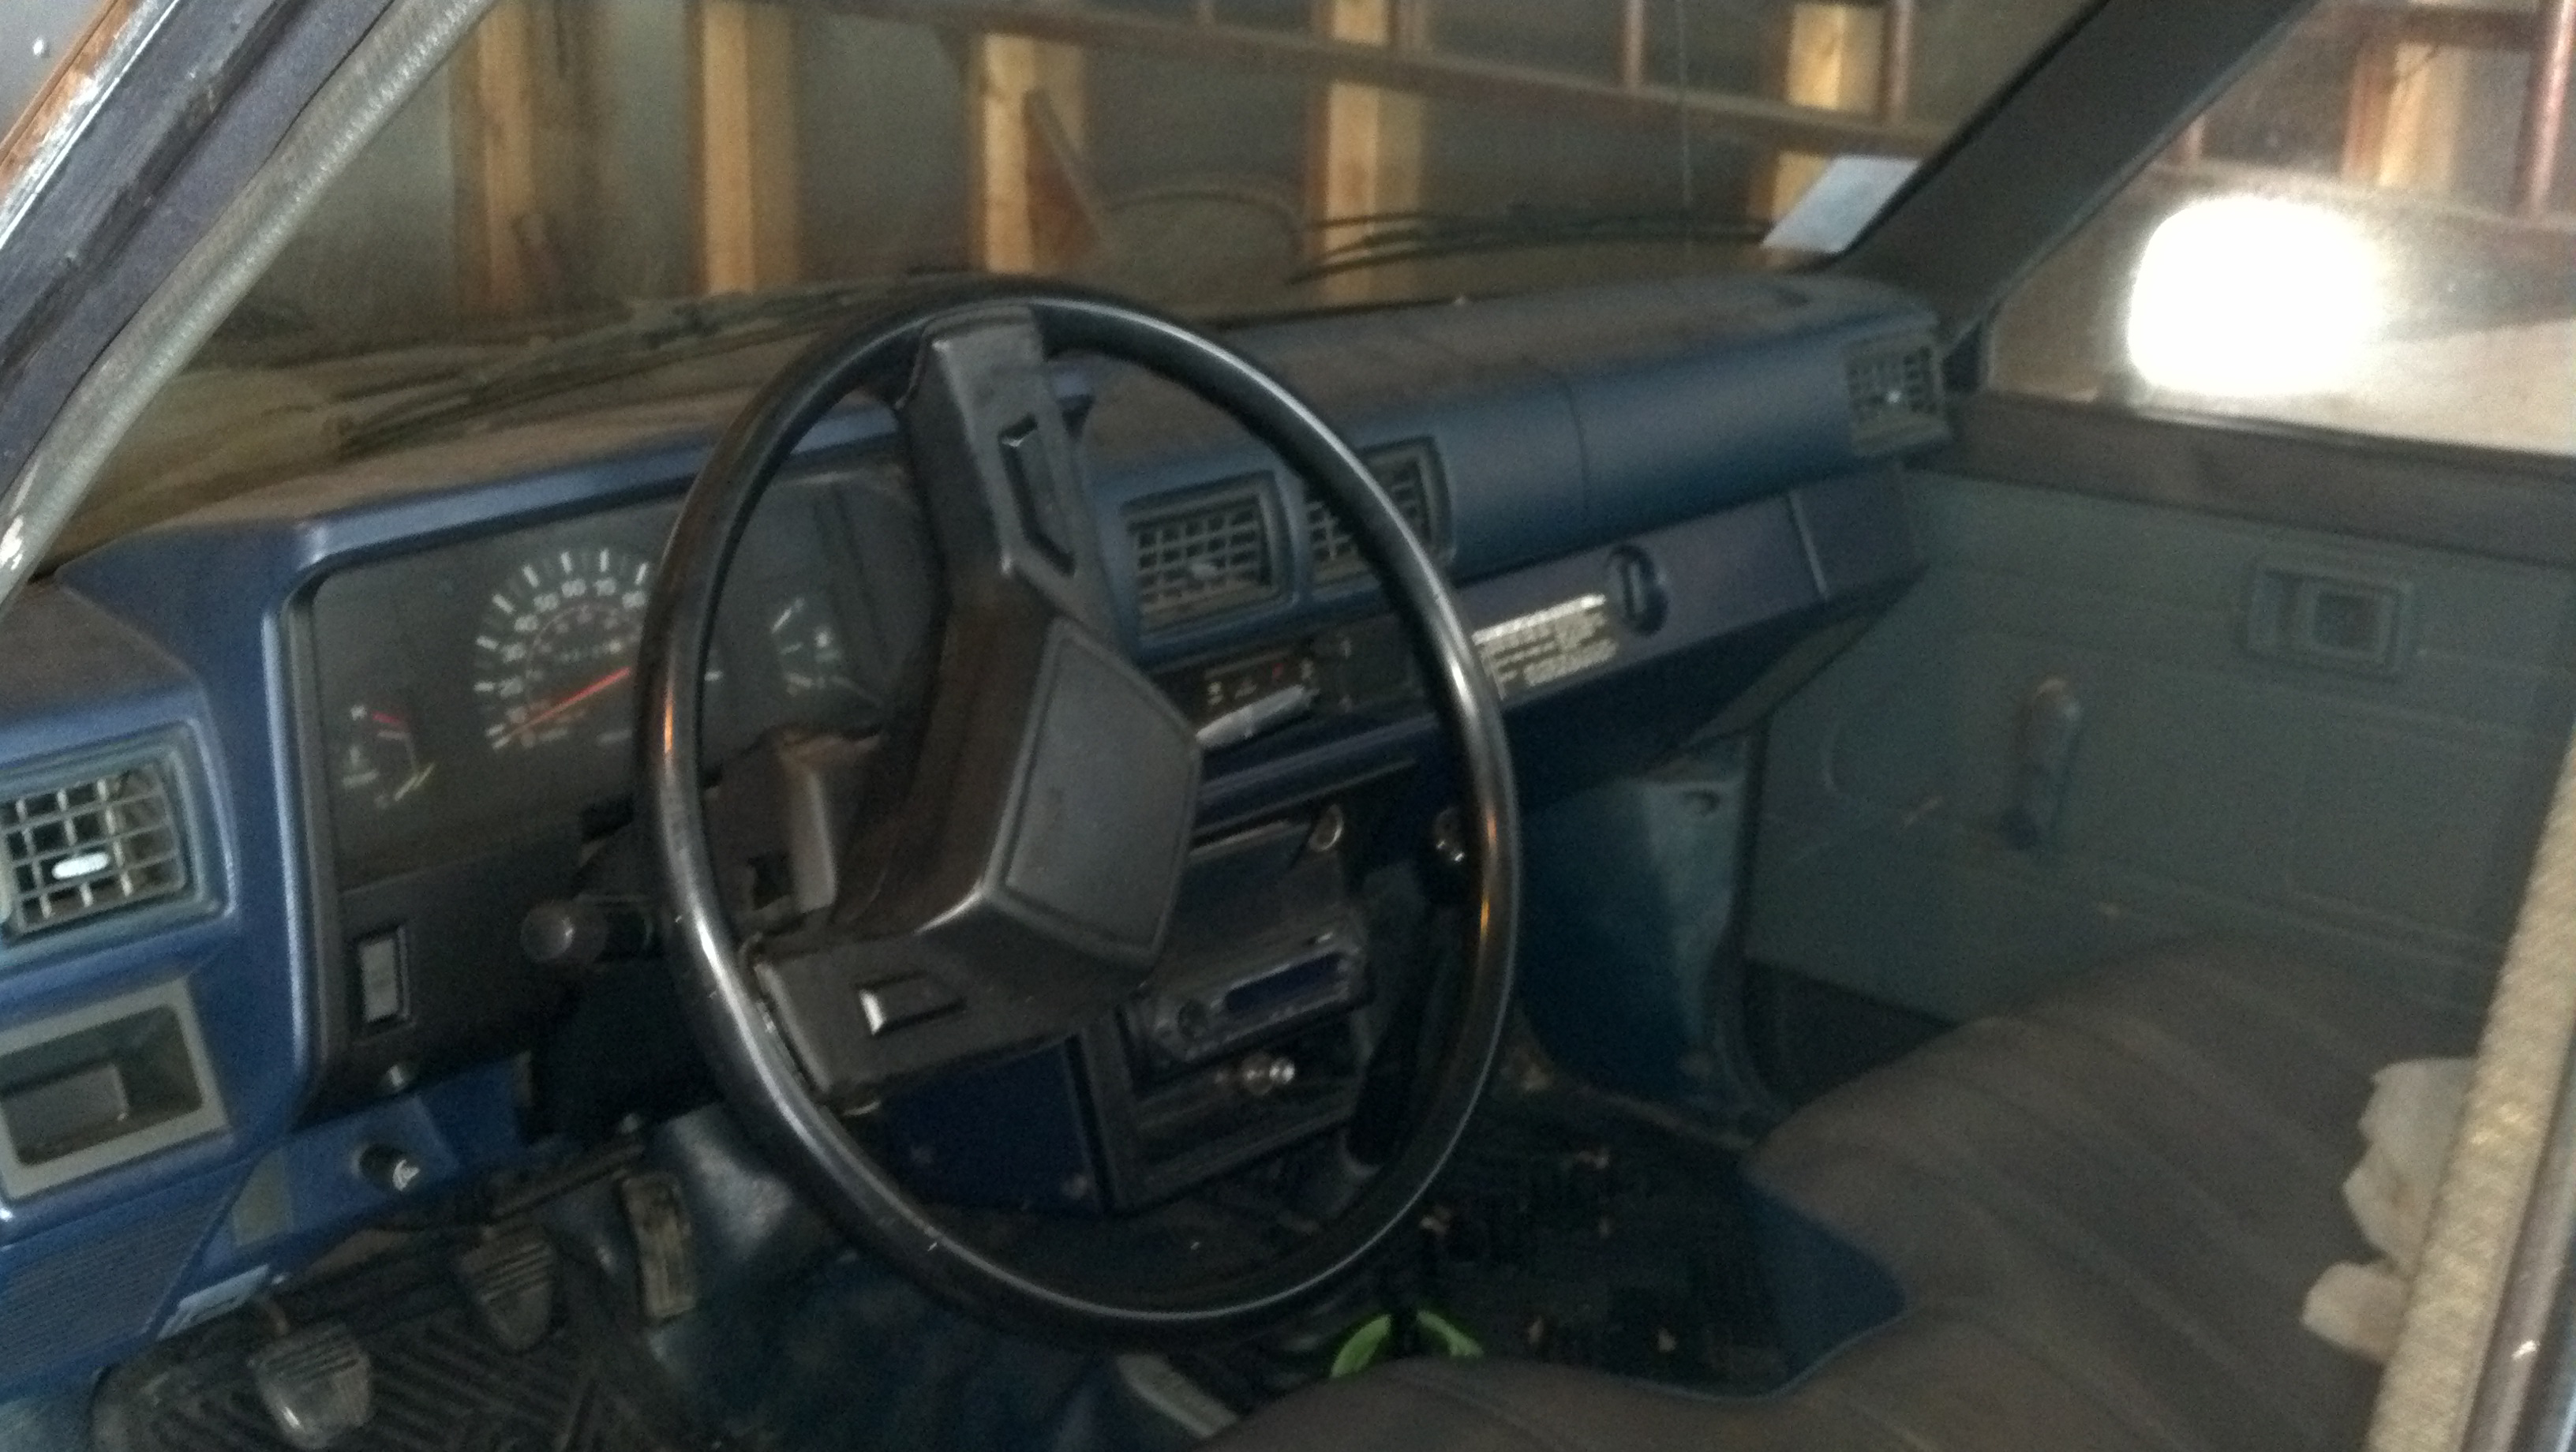 1986 Toyota truck interior